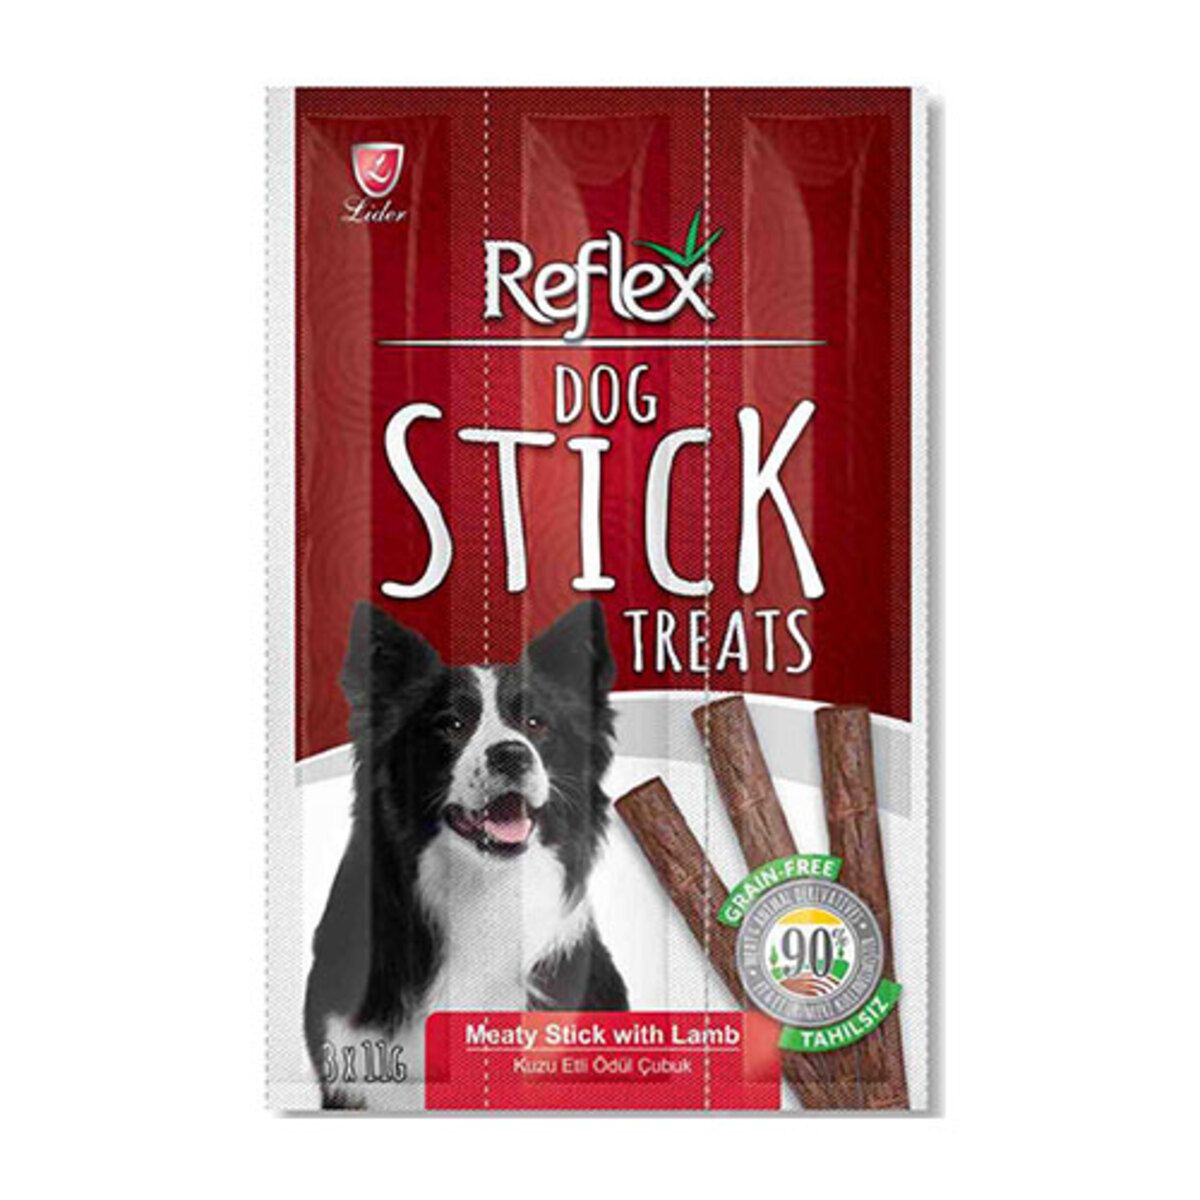 Reflex Stick Kuzulu Tahılsız Köpek Ödül Çubuğu 3x11 gr